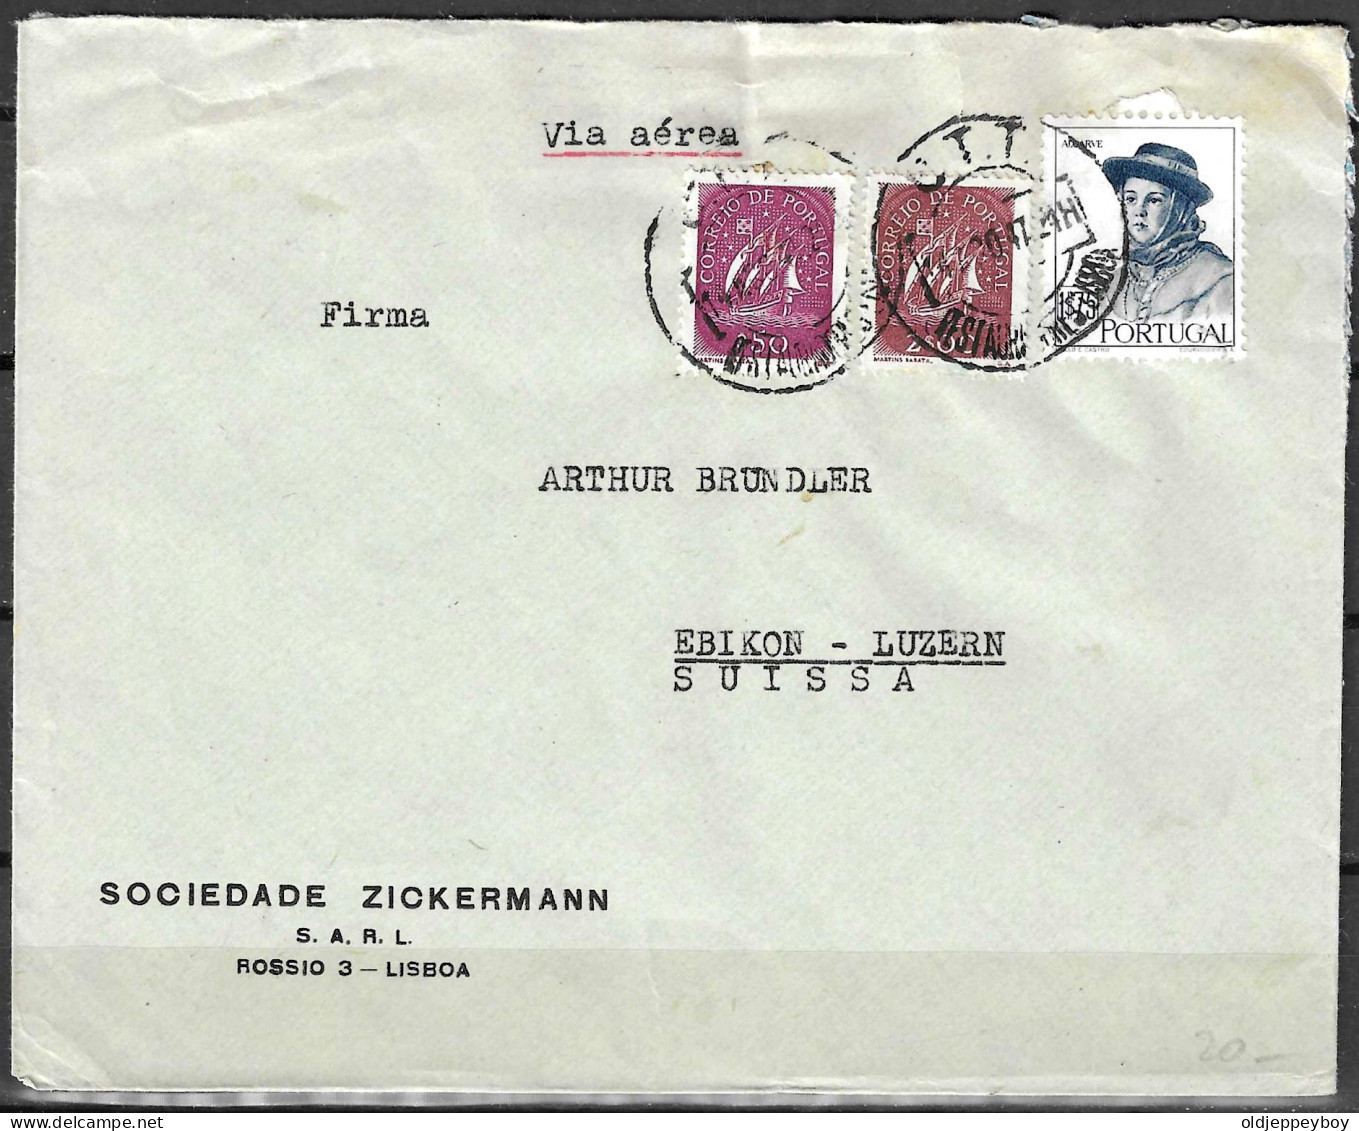 1947 PORTUGAL SOCIEDADE ZICKERMANN FUNDADA 1895 ENVELOPE COVER AIRMAIL TO EBIKON LUZERN SUISSA SUISSE SWITZERLAND  - Covers & Documents